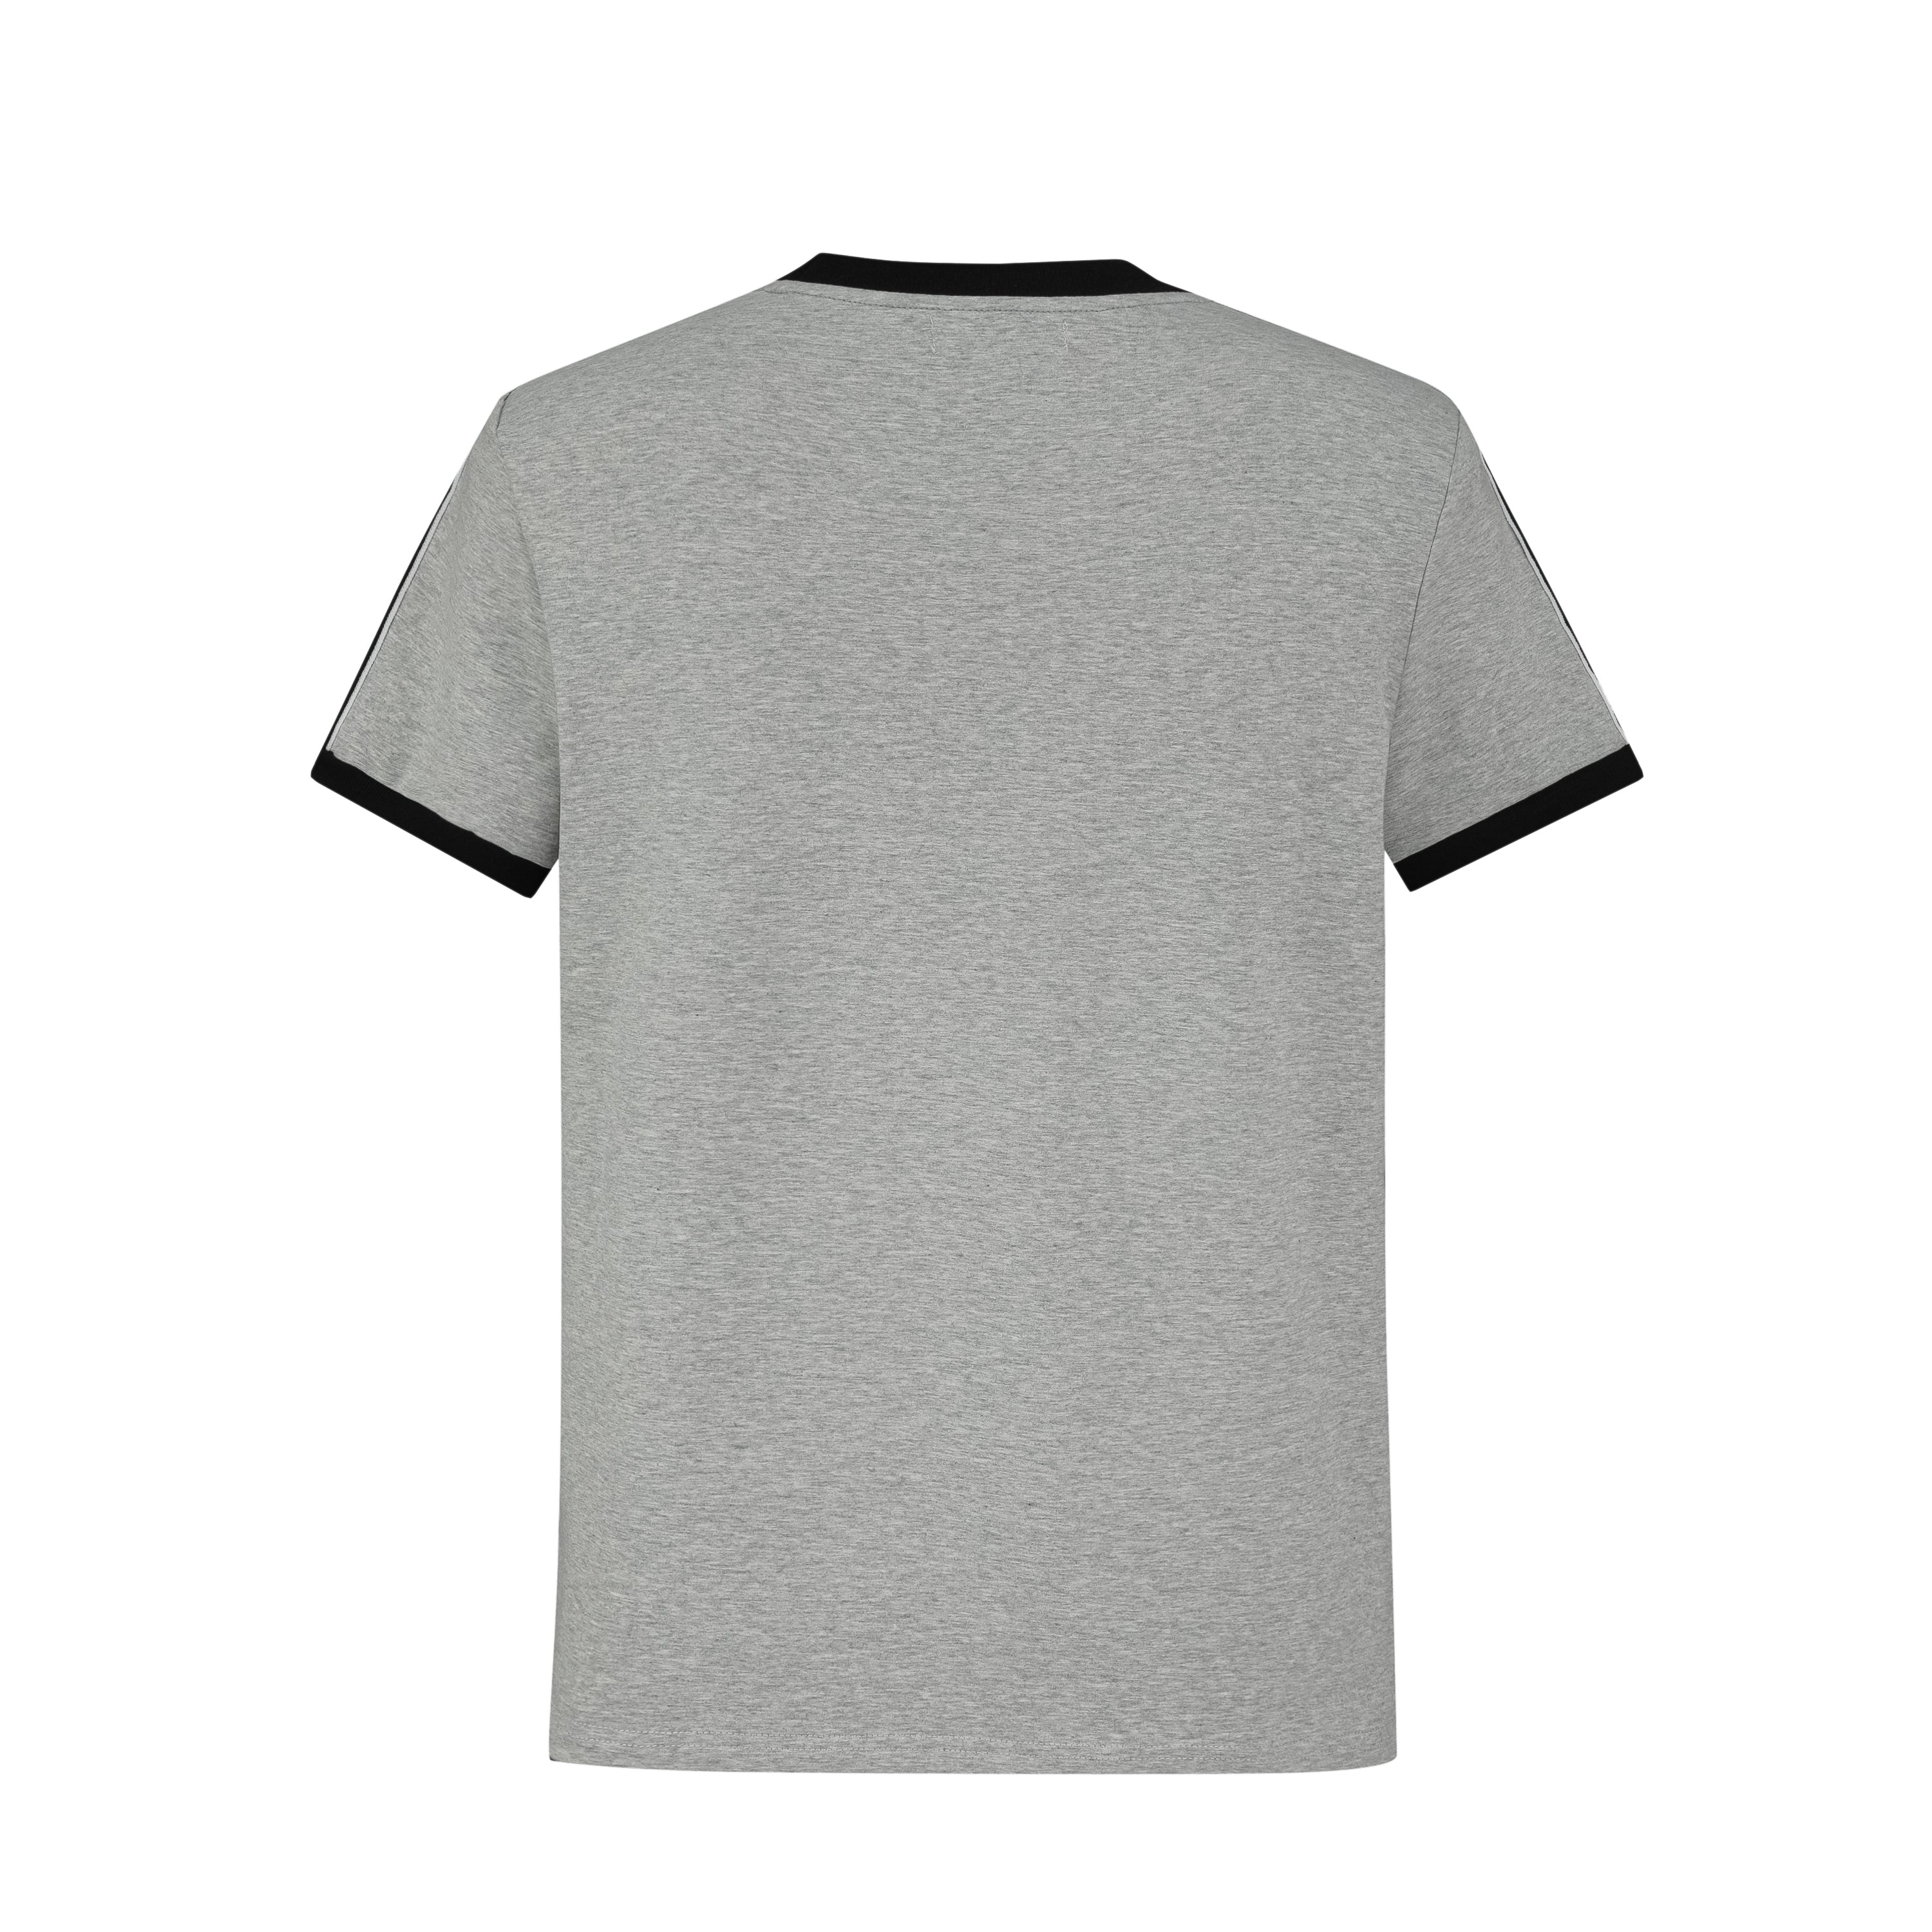 Short-sleeved t-shirt